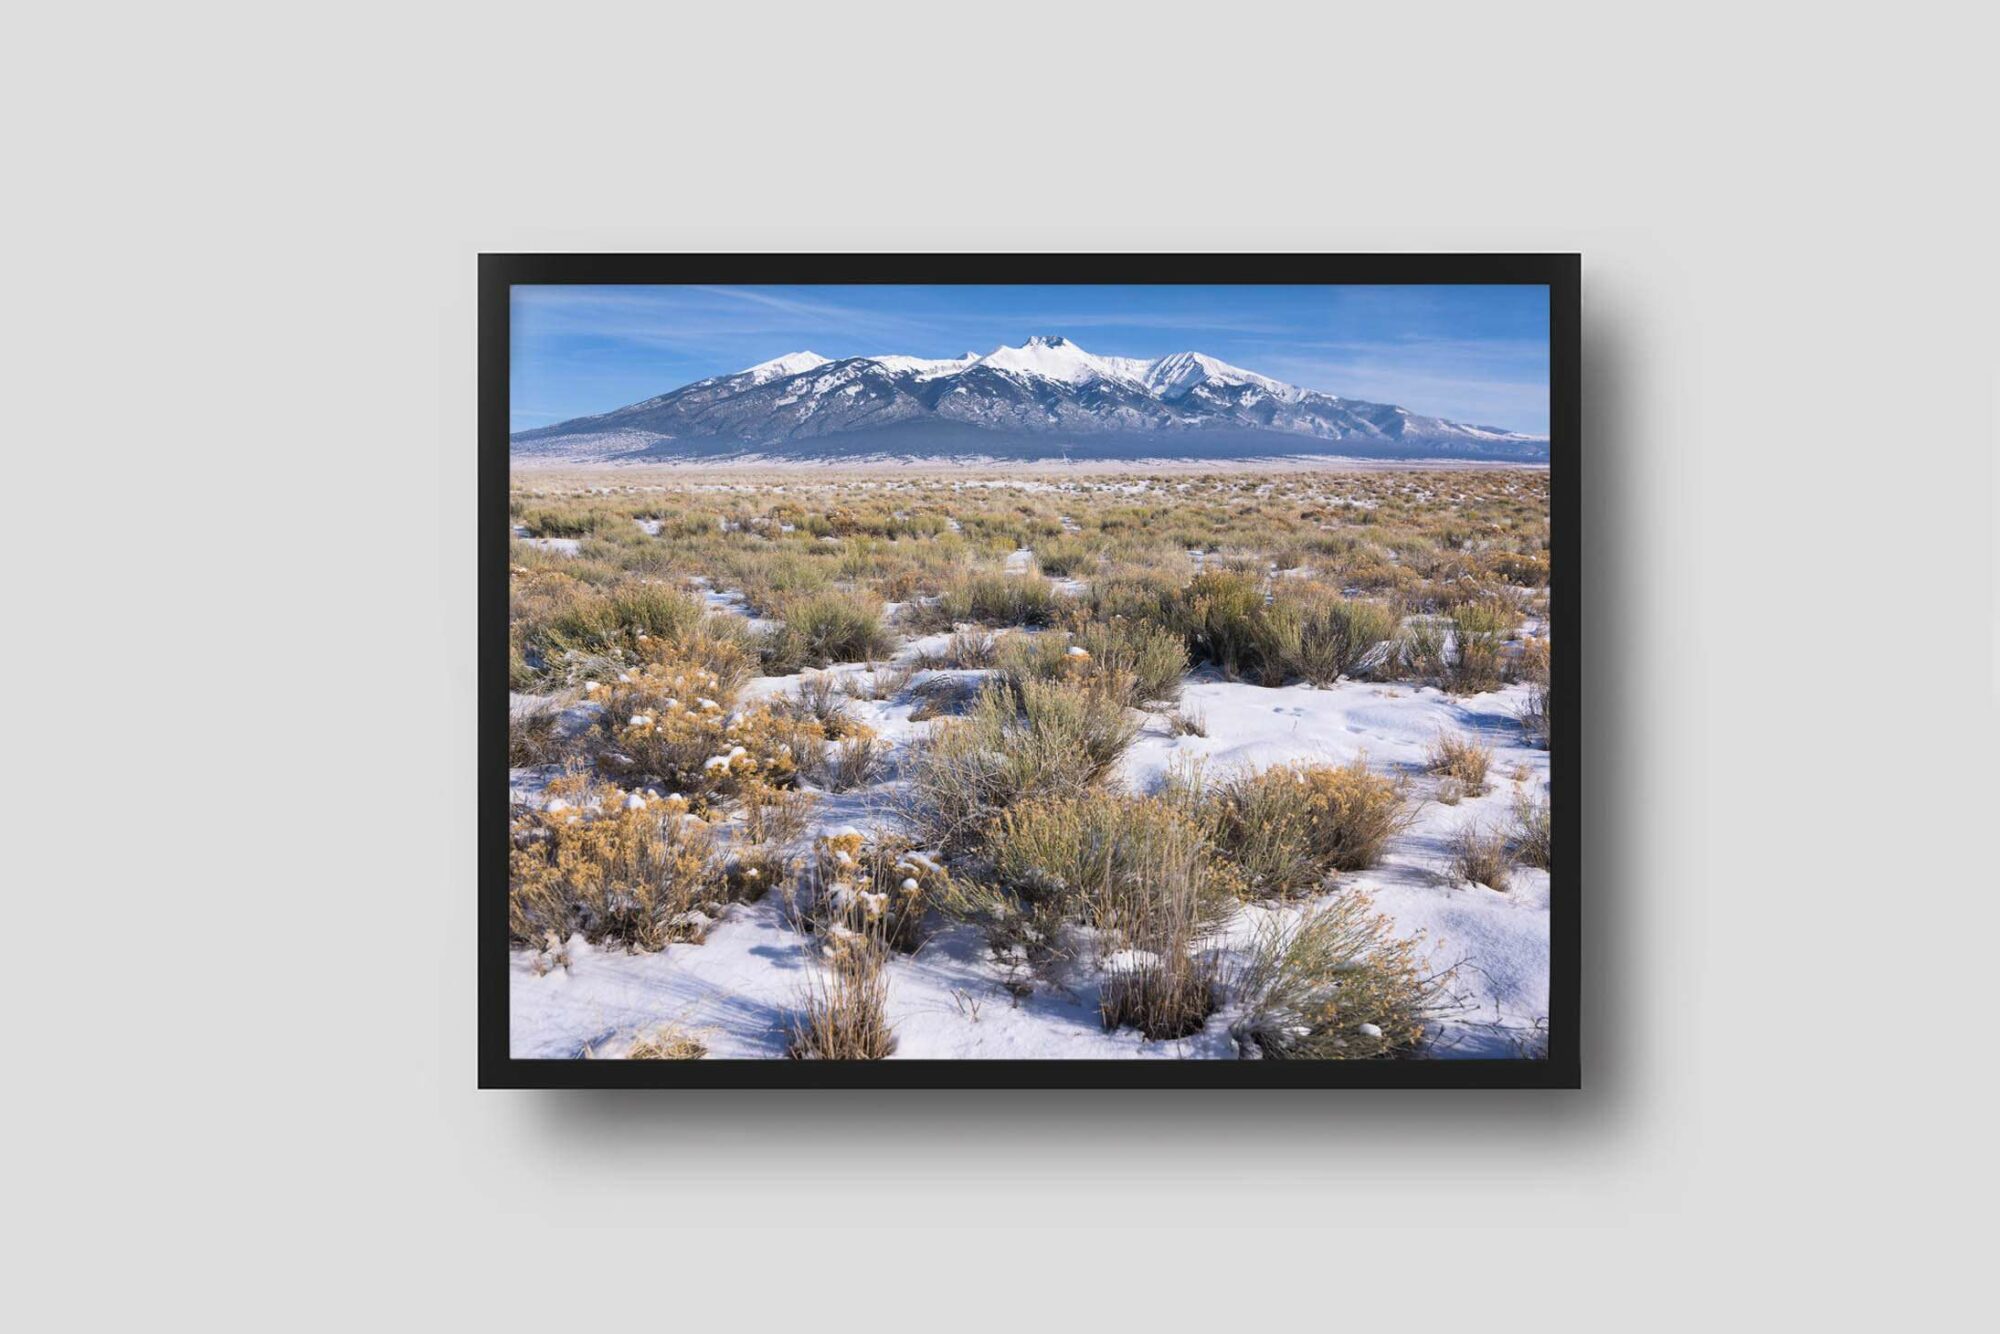 Colorado-photography-framed. Jpg